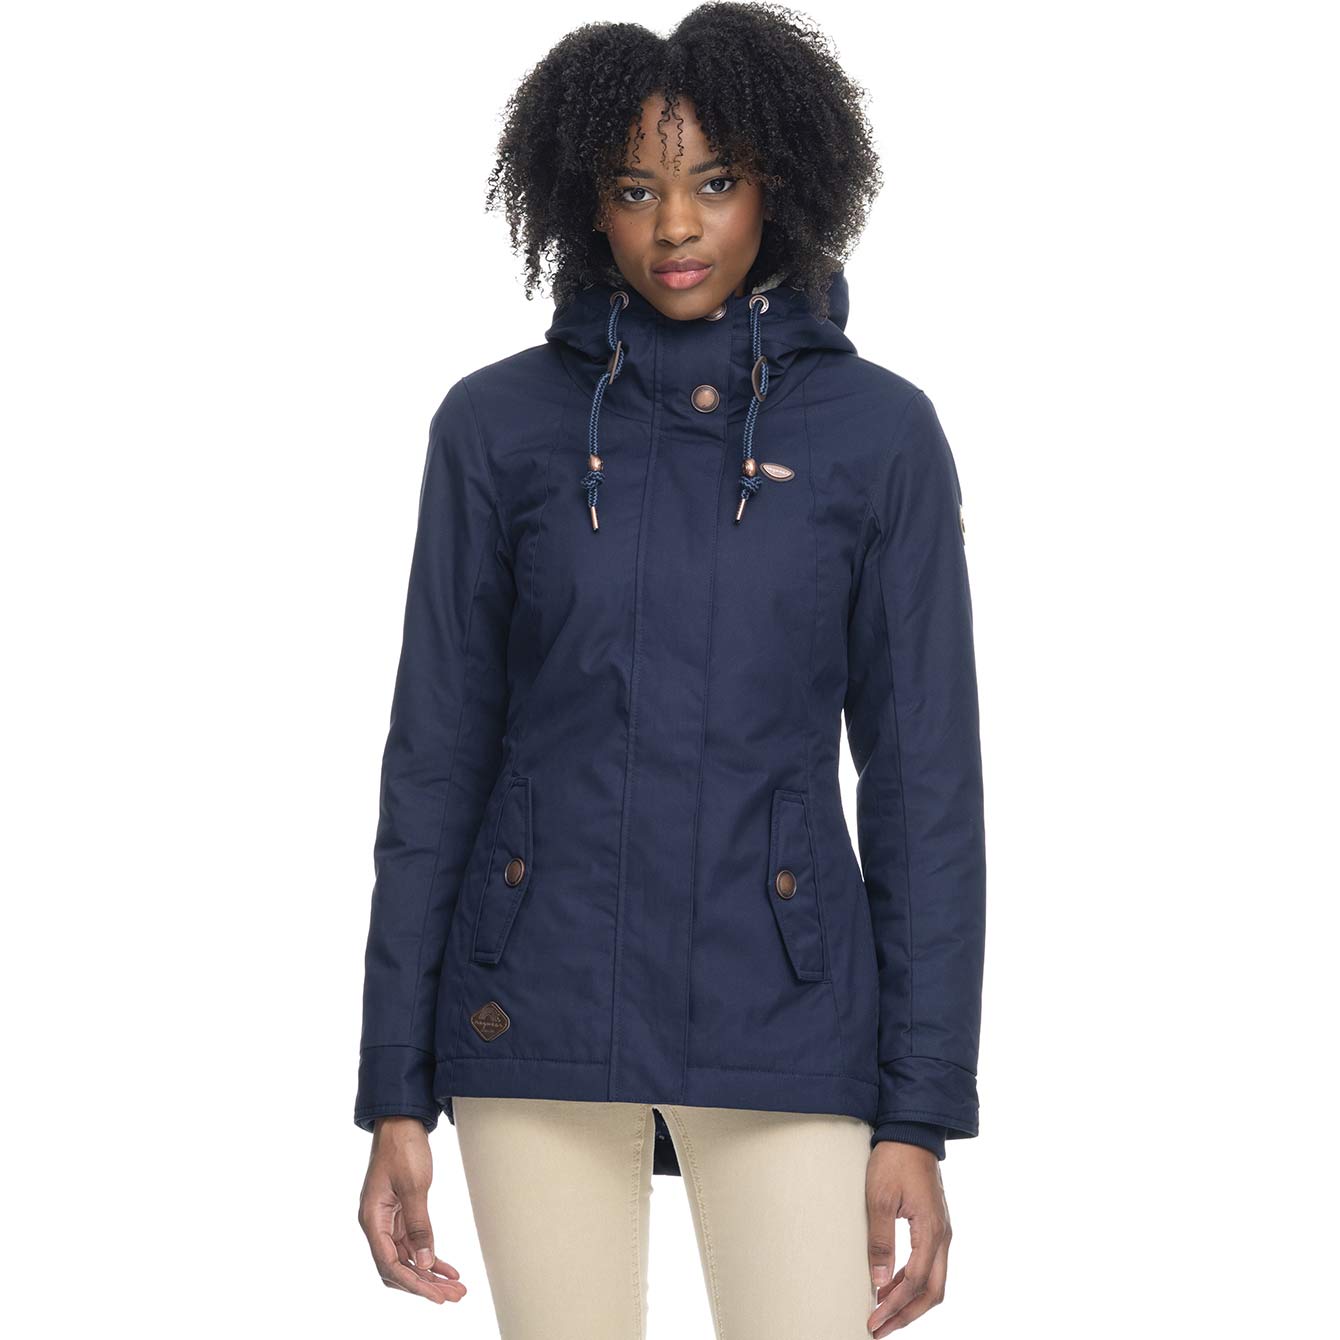 ragwear - Monade Winter Jacket Sport Bittl at navy Shop Women